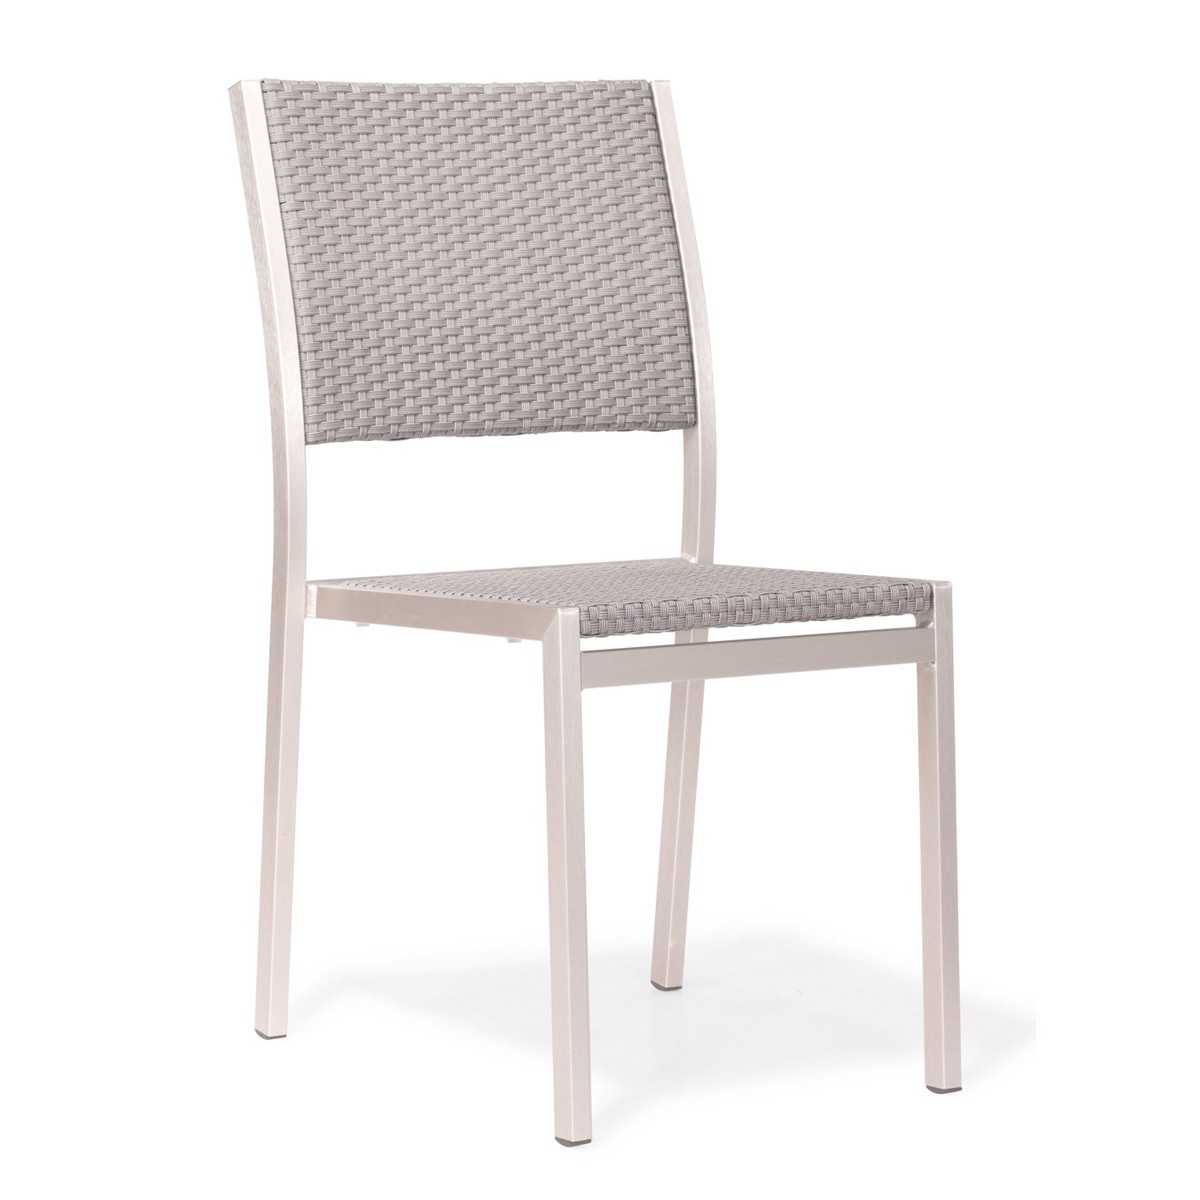 Zuo Modern Metropolitan Dining Armless Chair - Brushed Aluminum